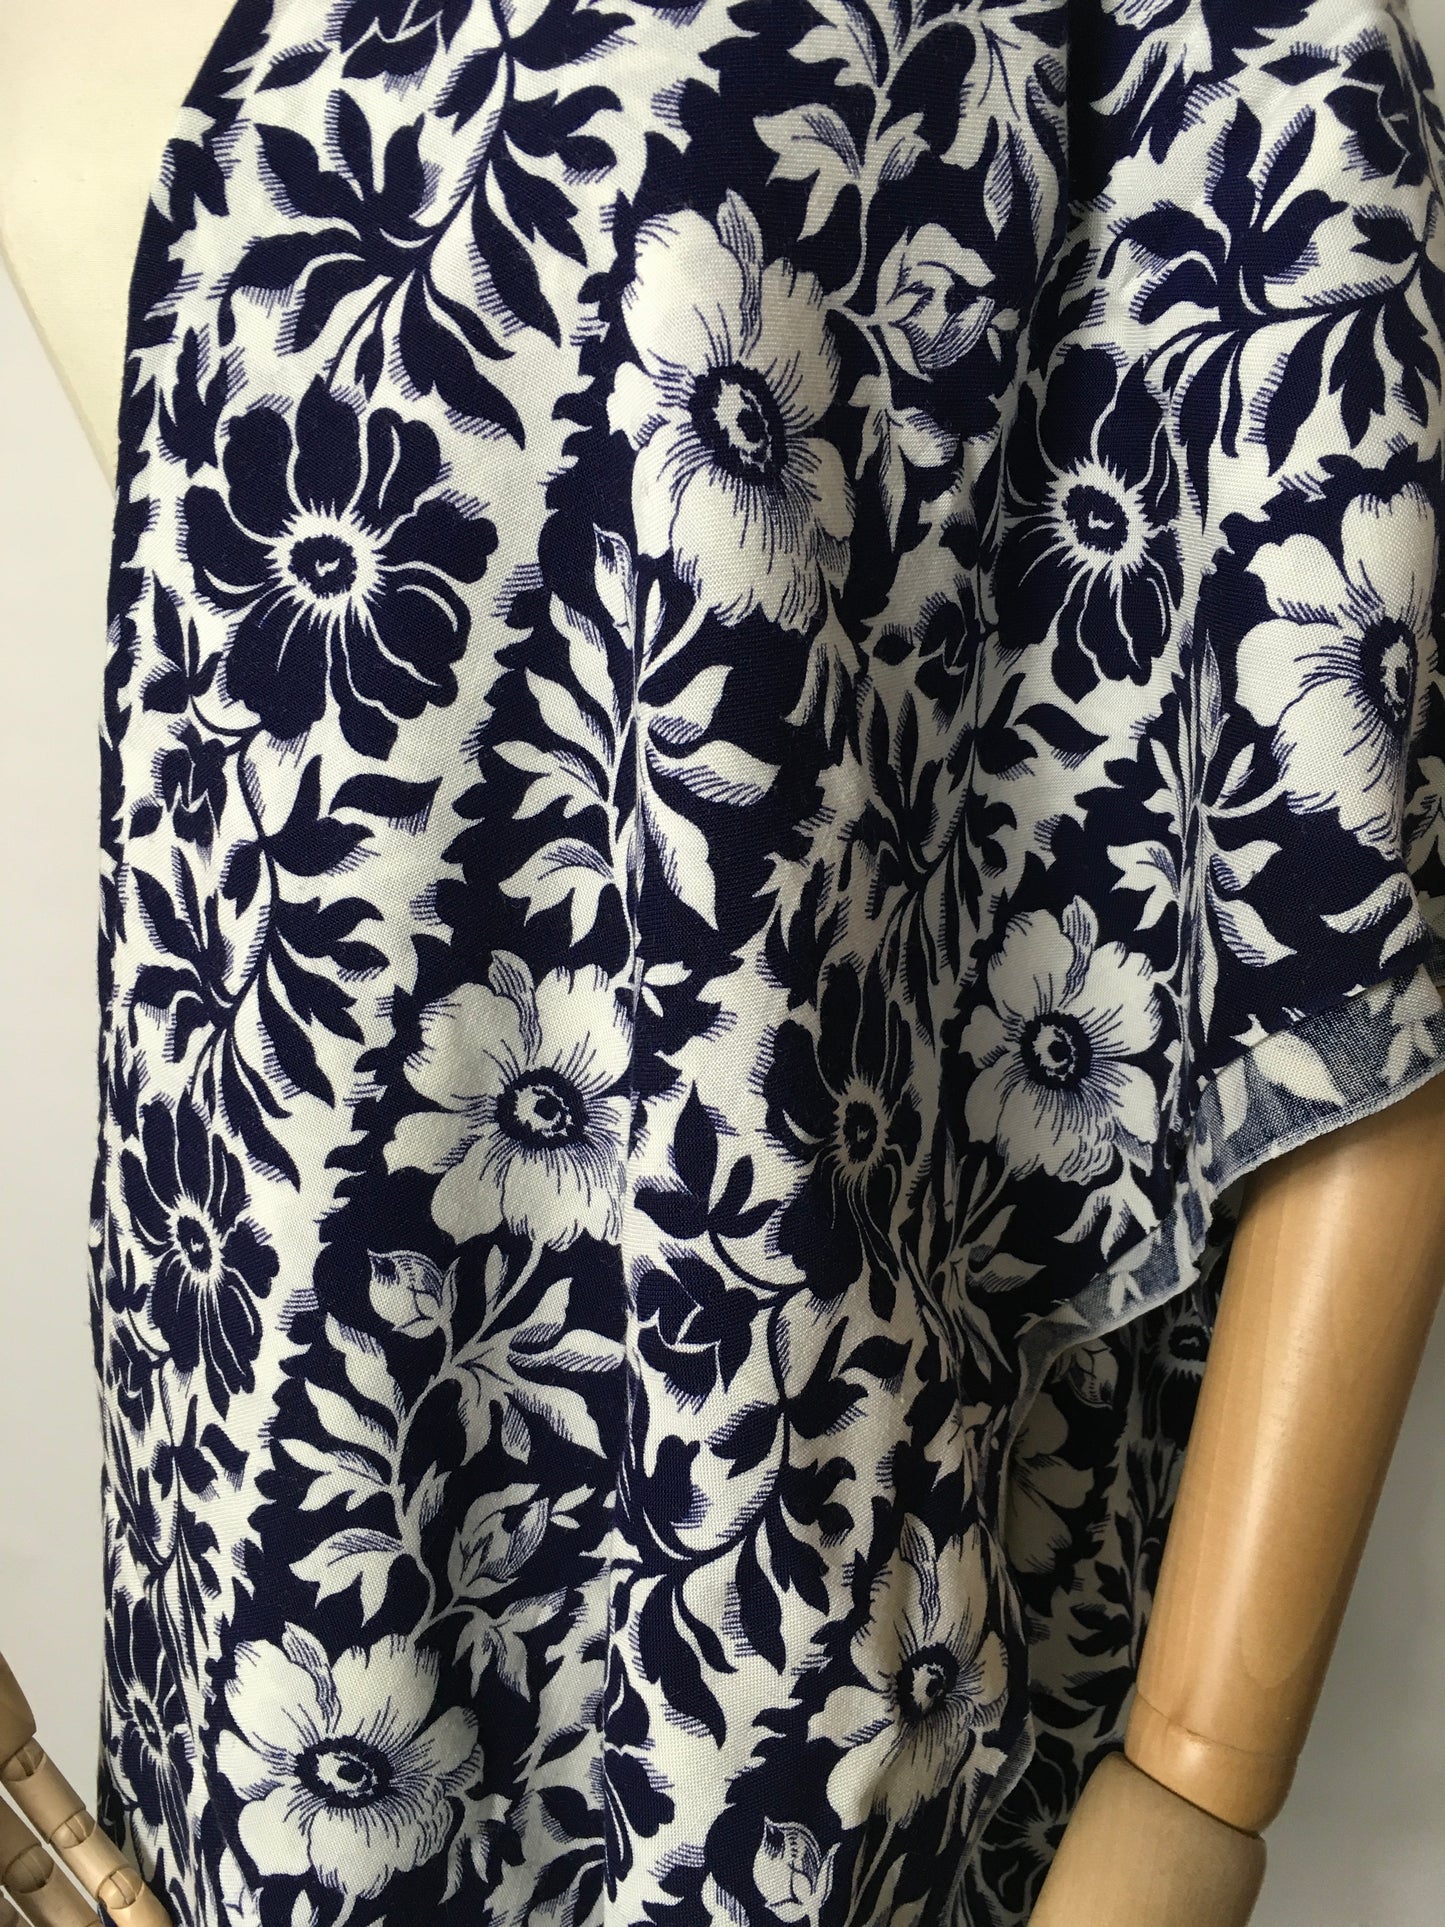 Original 1940’s Moygoshal Linen Dress Fabric - Suspected CC41 due to iconic floral Design - 3.5m